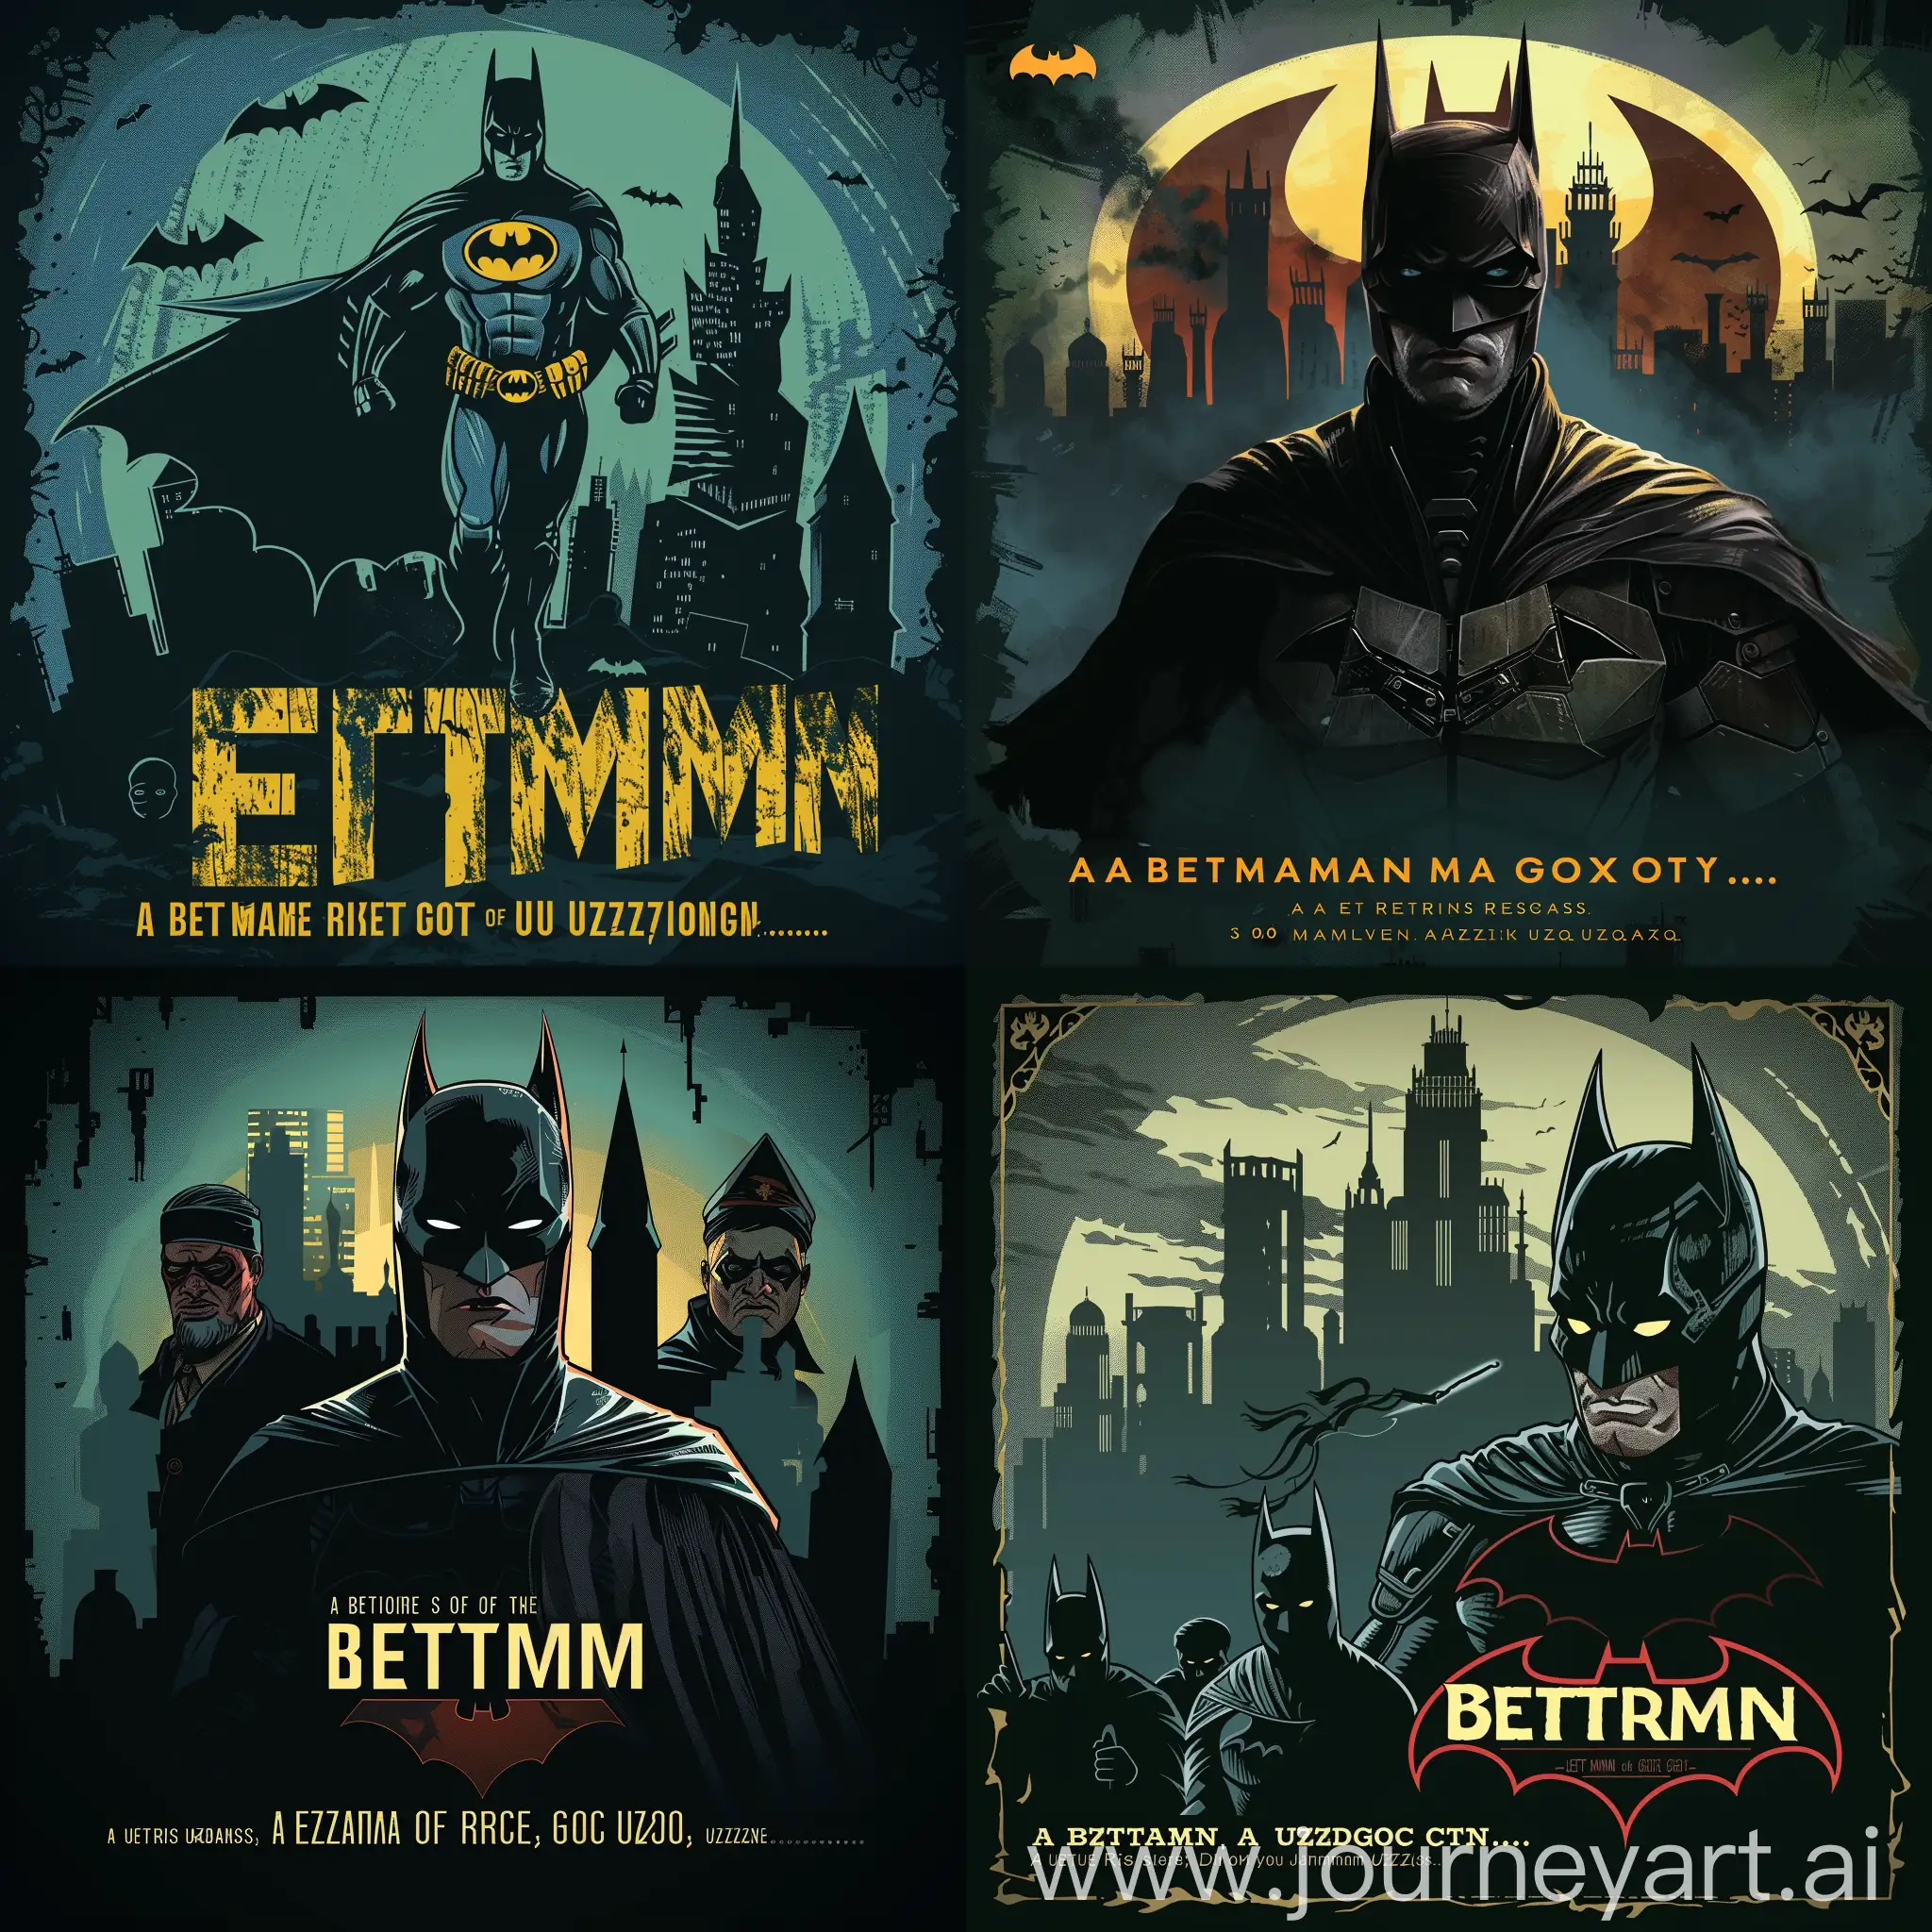 Title: Betman and Uzbeks  Design Elements:  Dark Gotham City skyline. Betman in iconic suit. Shadowy Uzbeks. DC Comics logo. Tagline: "A Hero Rises from the Shadows..."